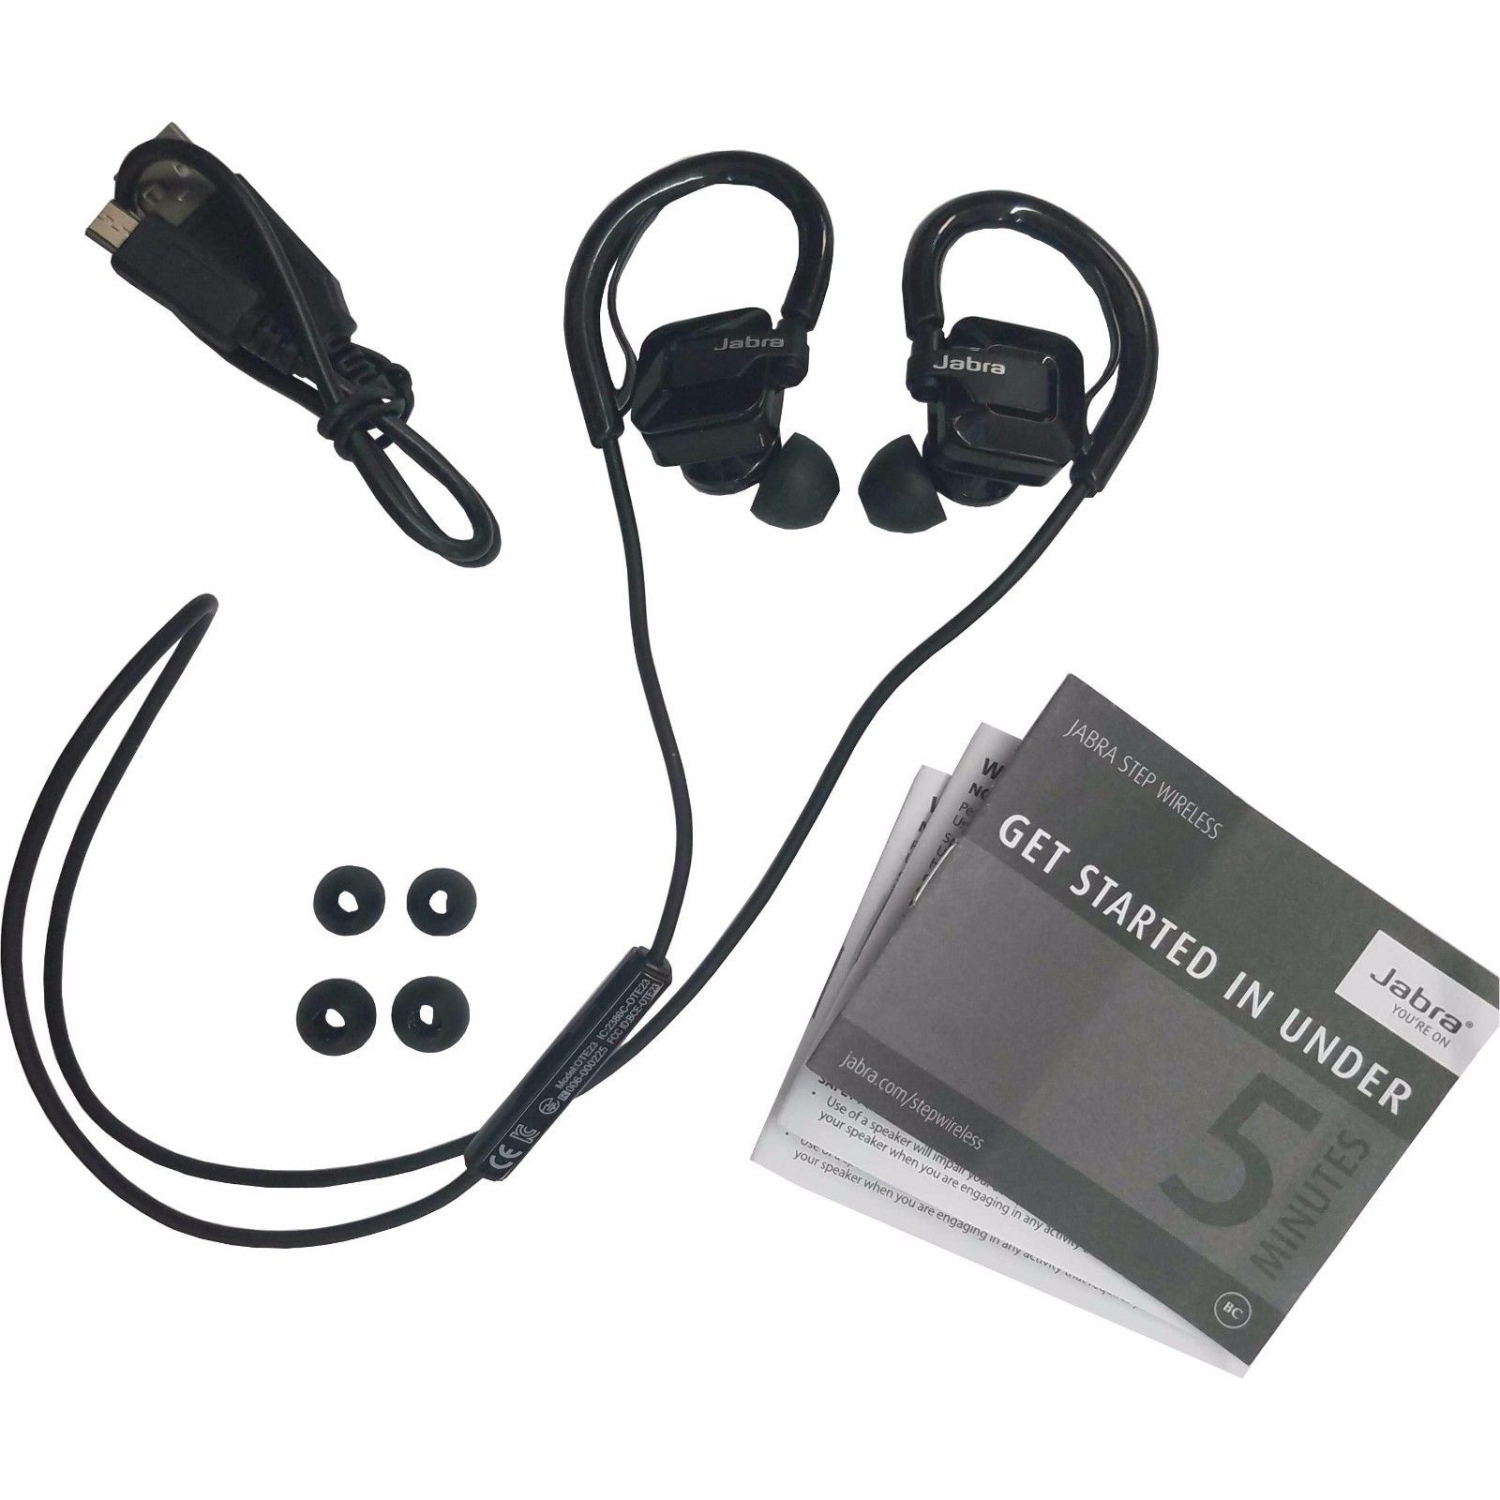 Jabra STEP Black Ear-Hook Headset Wireless Bluetooth Stereo Music Sport Earbuds - Certified Refurbished